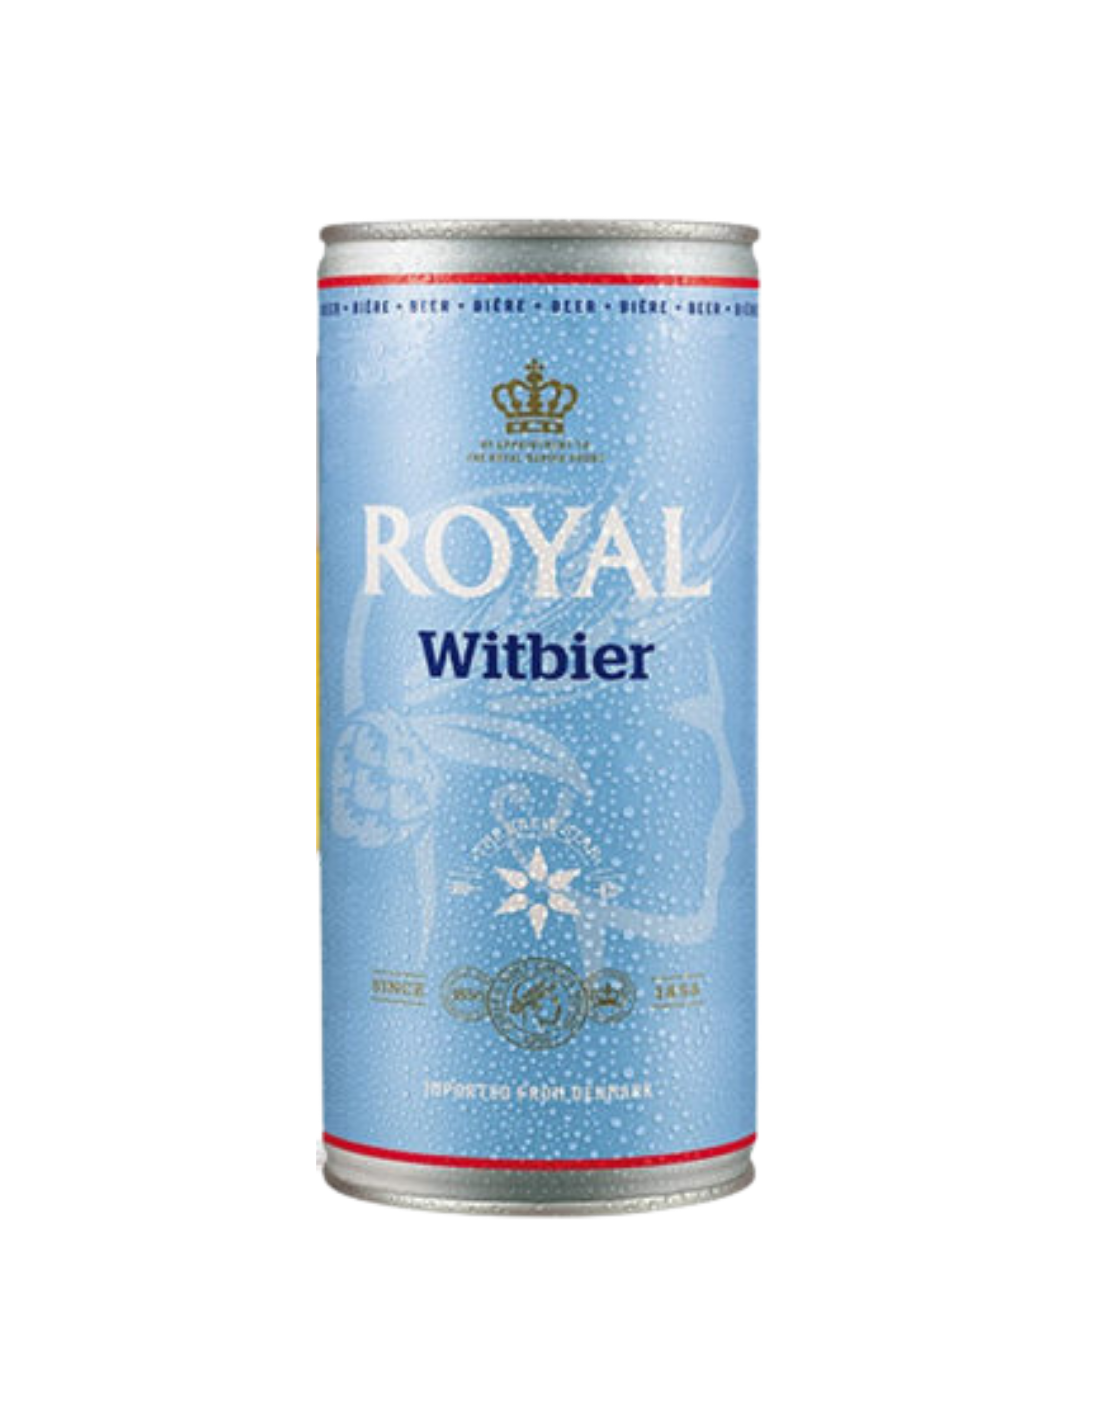 Bere blonda RoyaL, Witbier, 5.2% alc., 1L, Danemarca alcooldiscount.ro